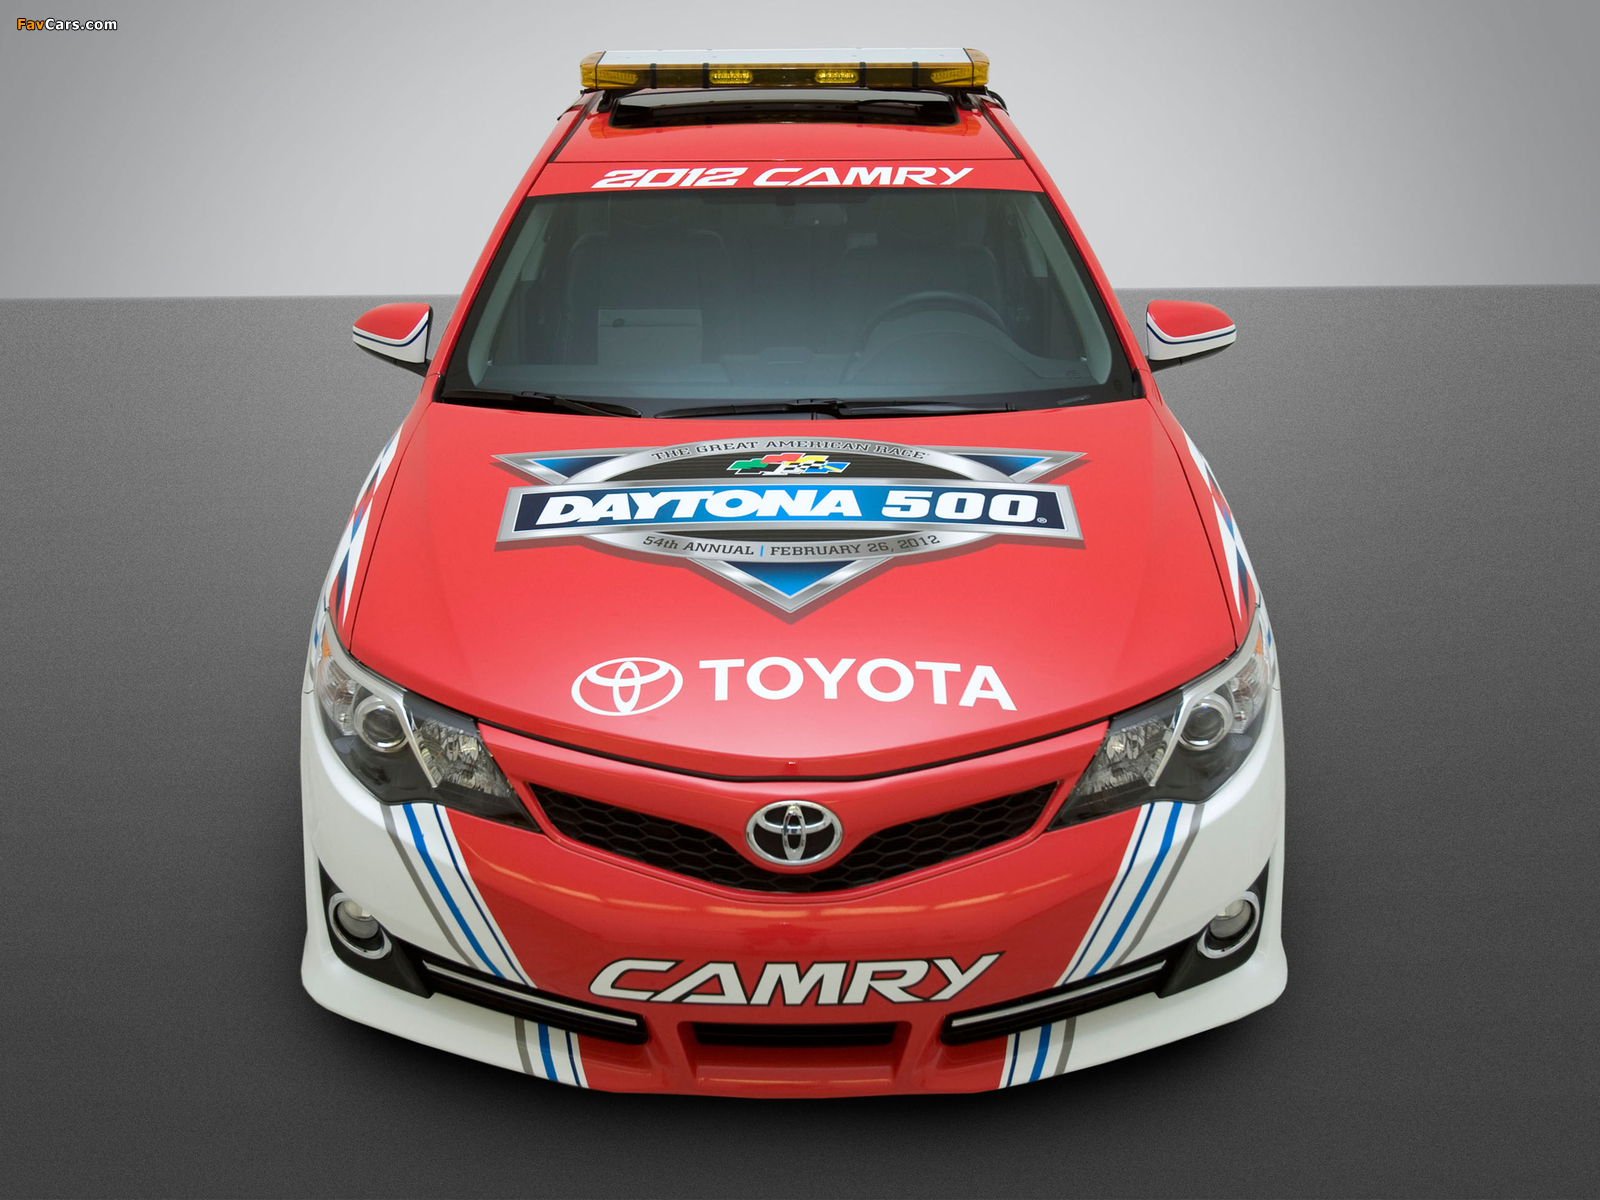 Toyota Camry SE Daytona 500 Pace Car 2012 photos (1600 x 1200)